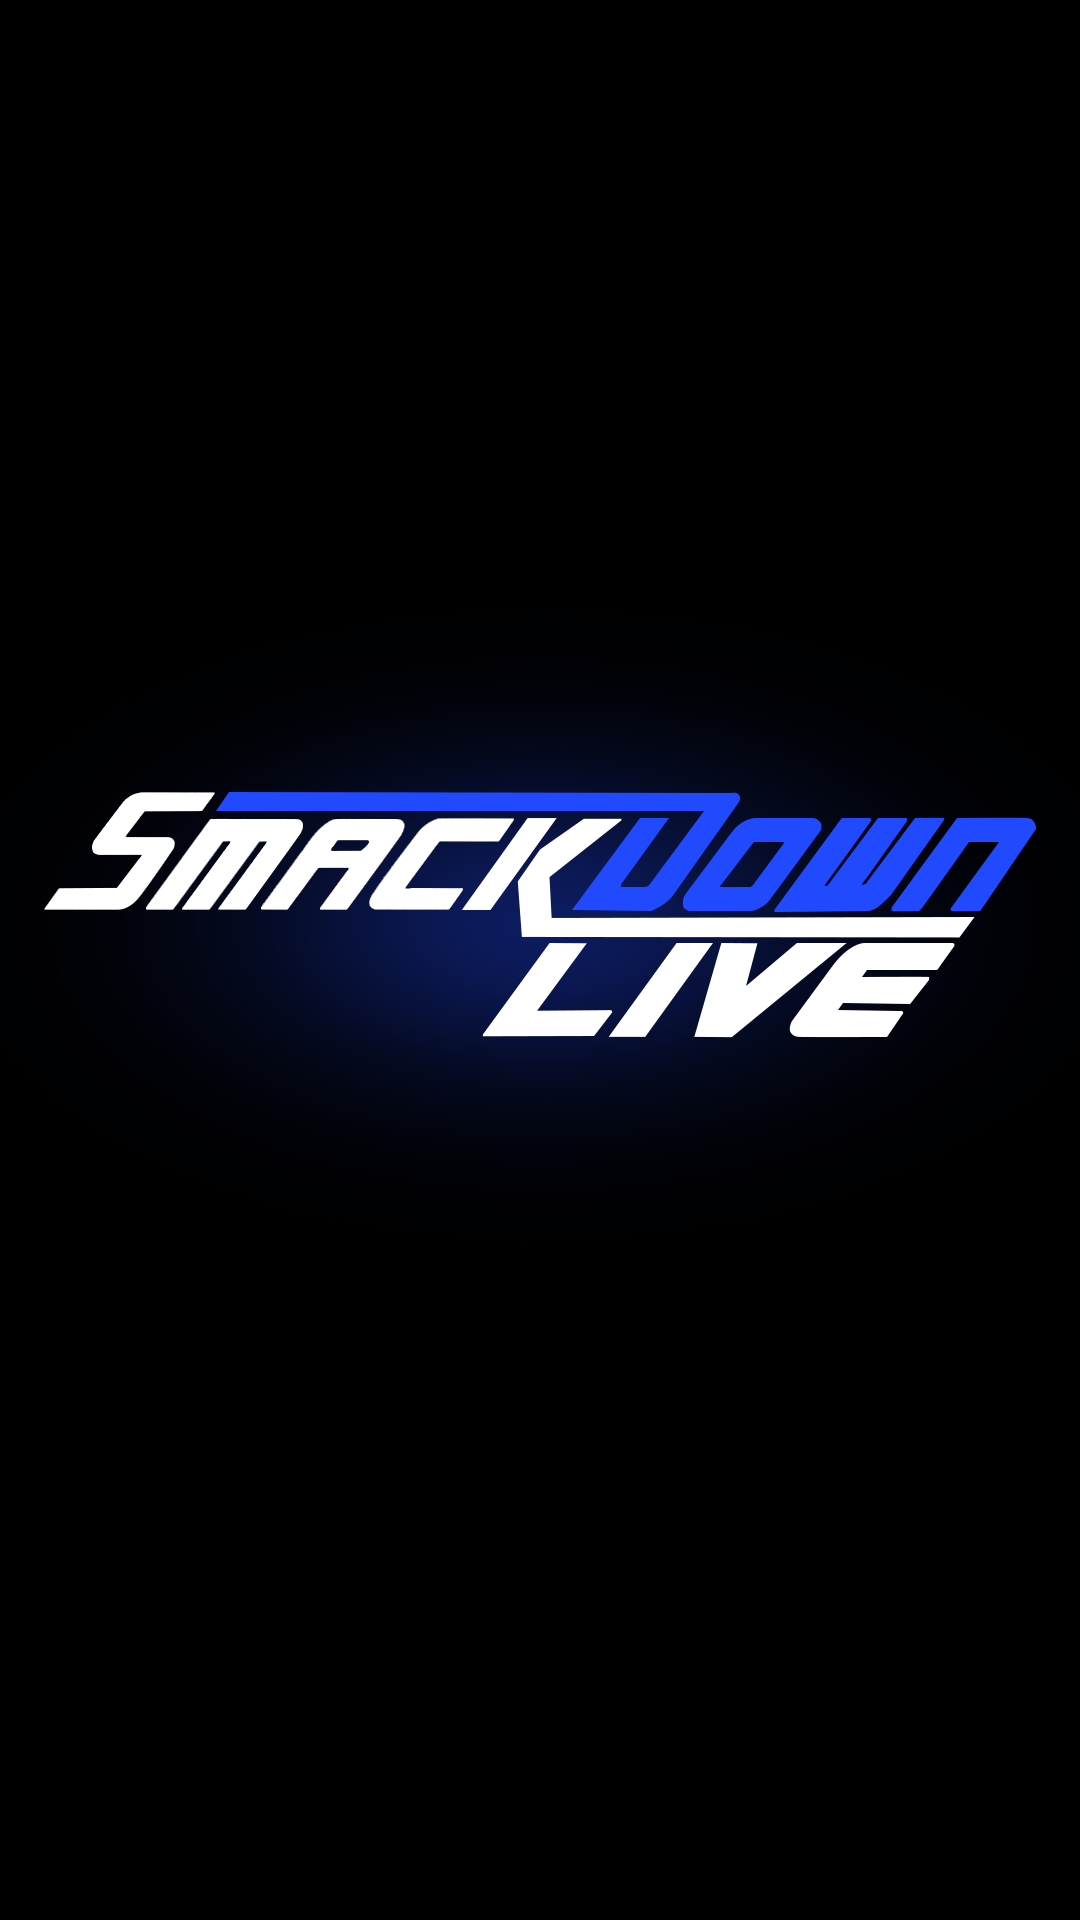 WWE Smackdown Logo Wallpapers Wallpaper Cave